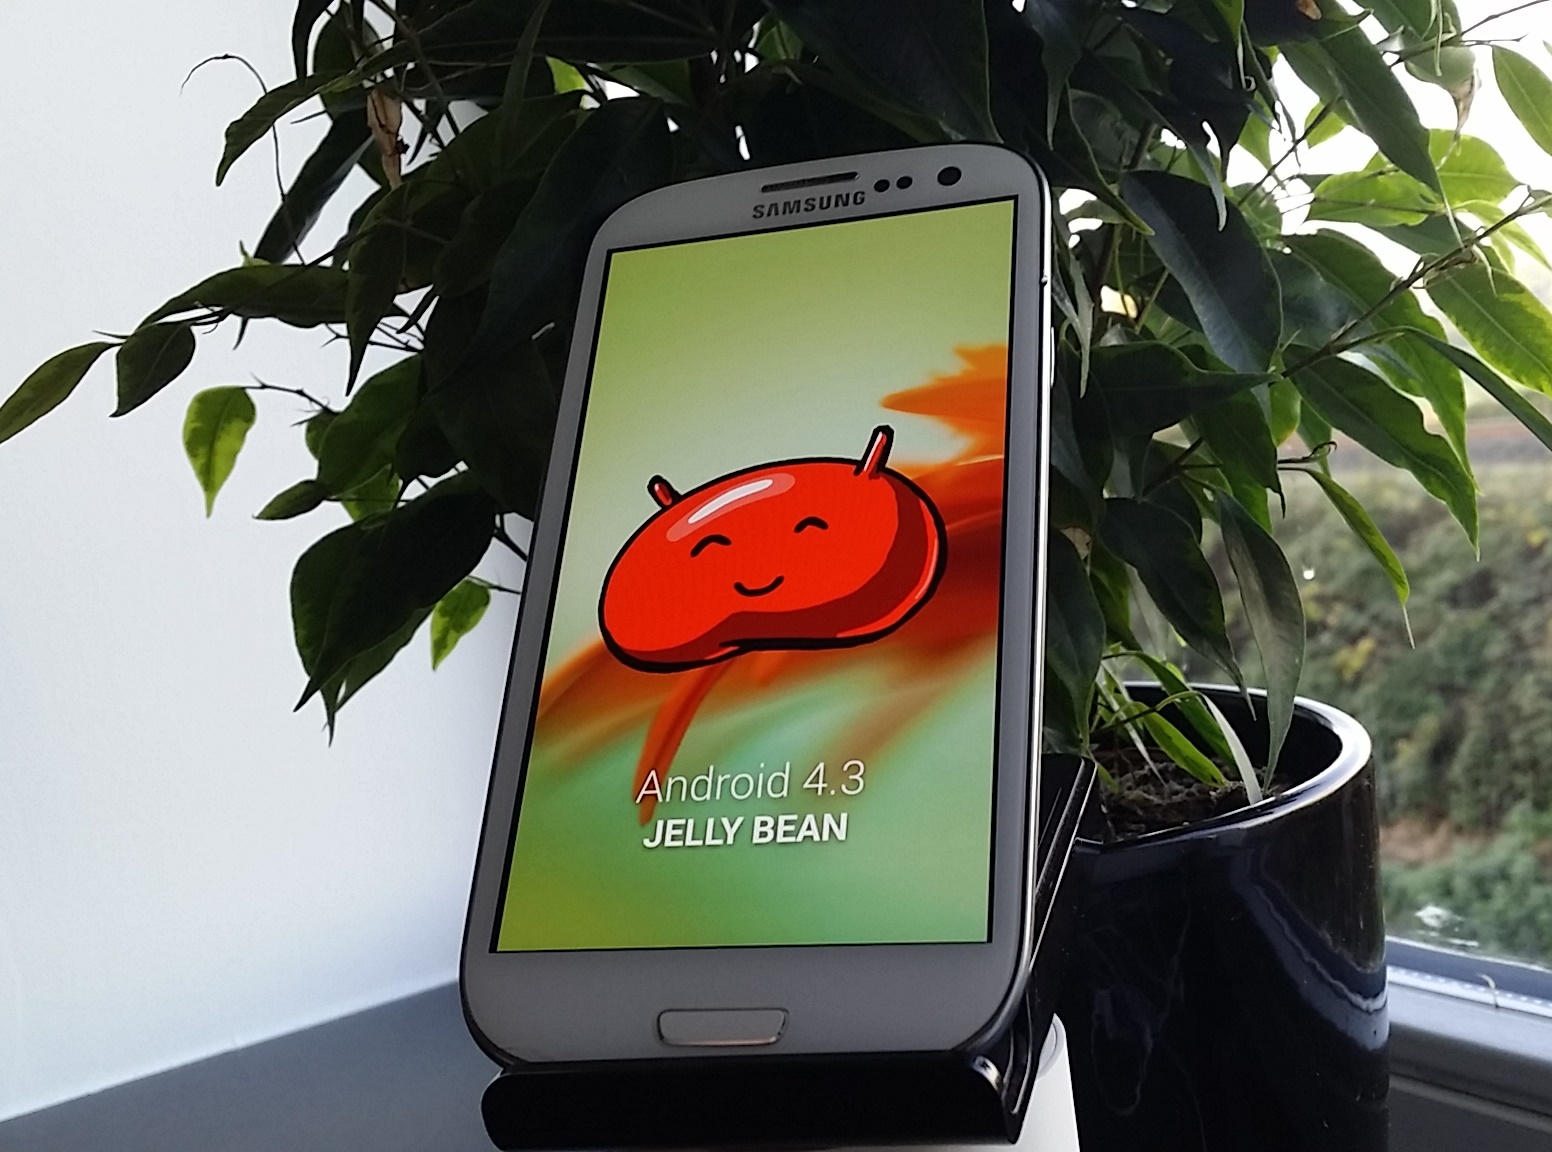 Samsung Galaxy s3 андроид 4.4